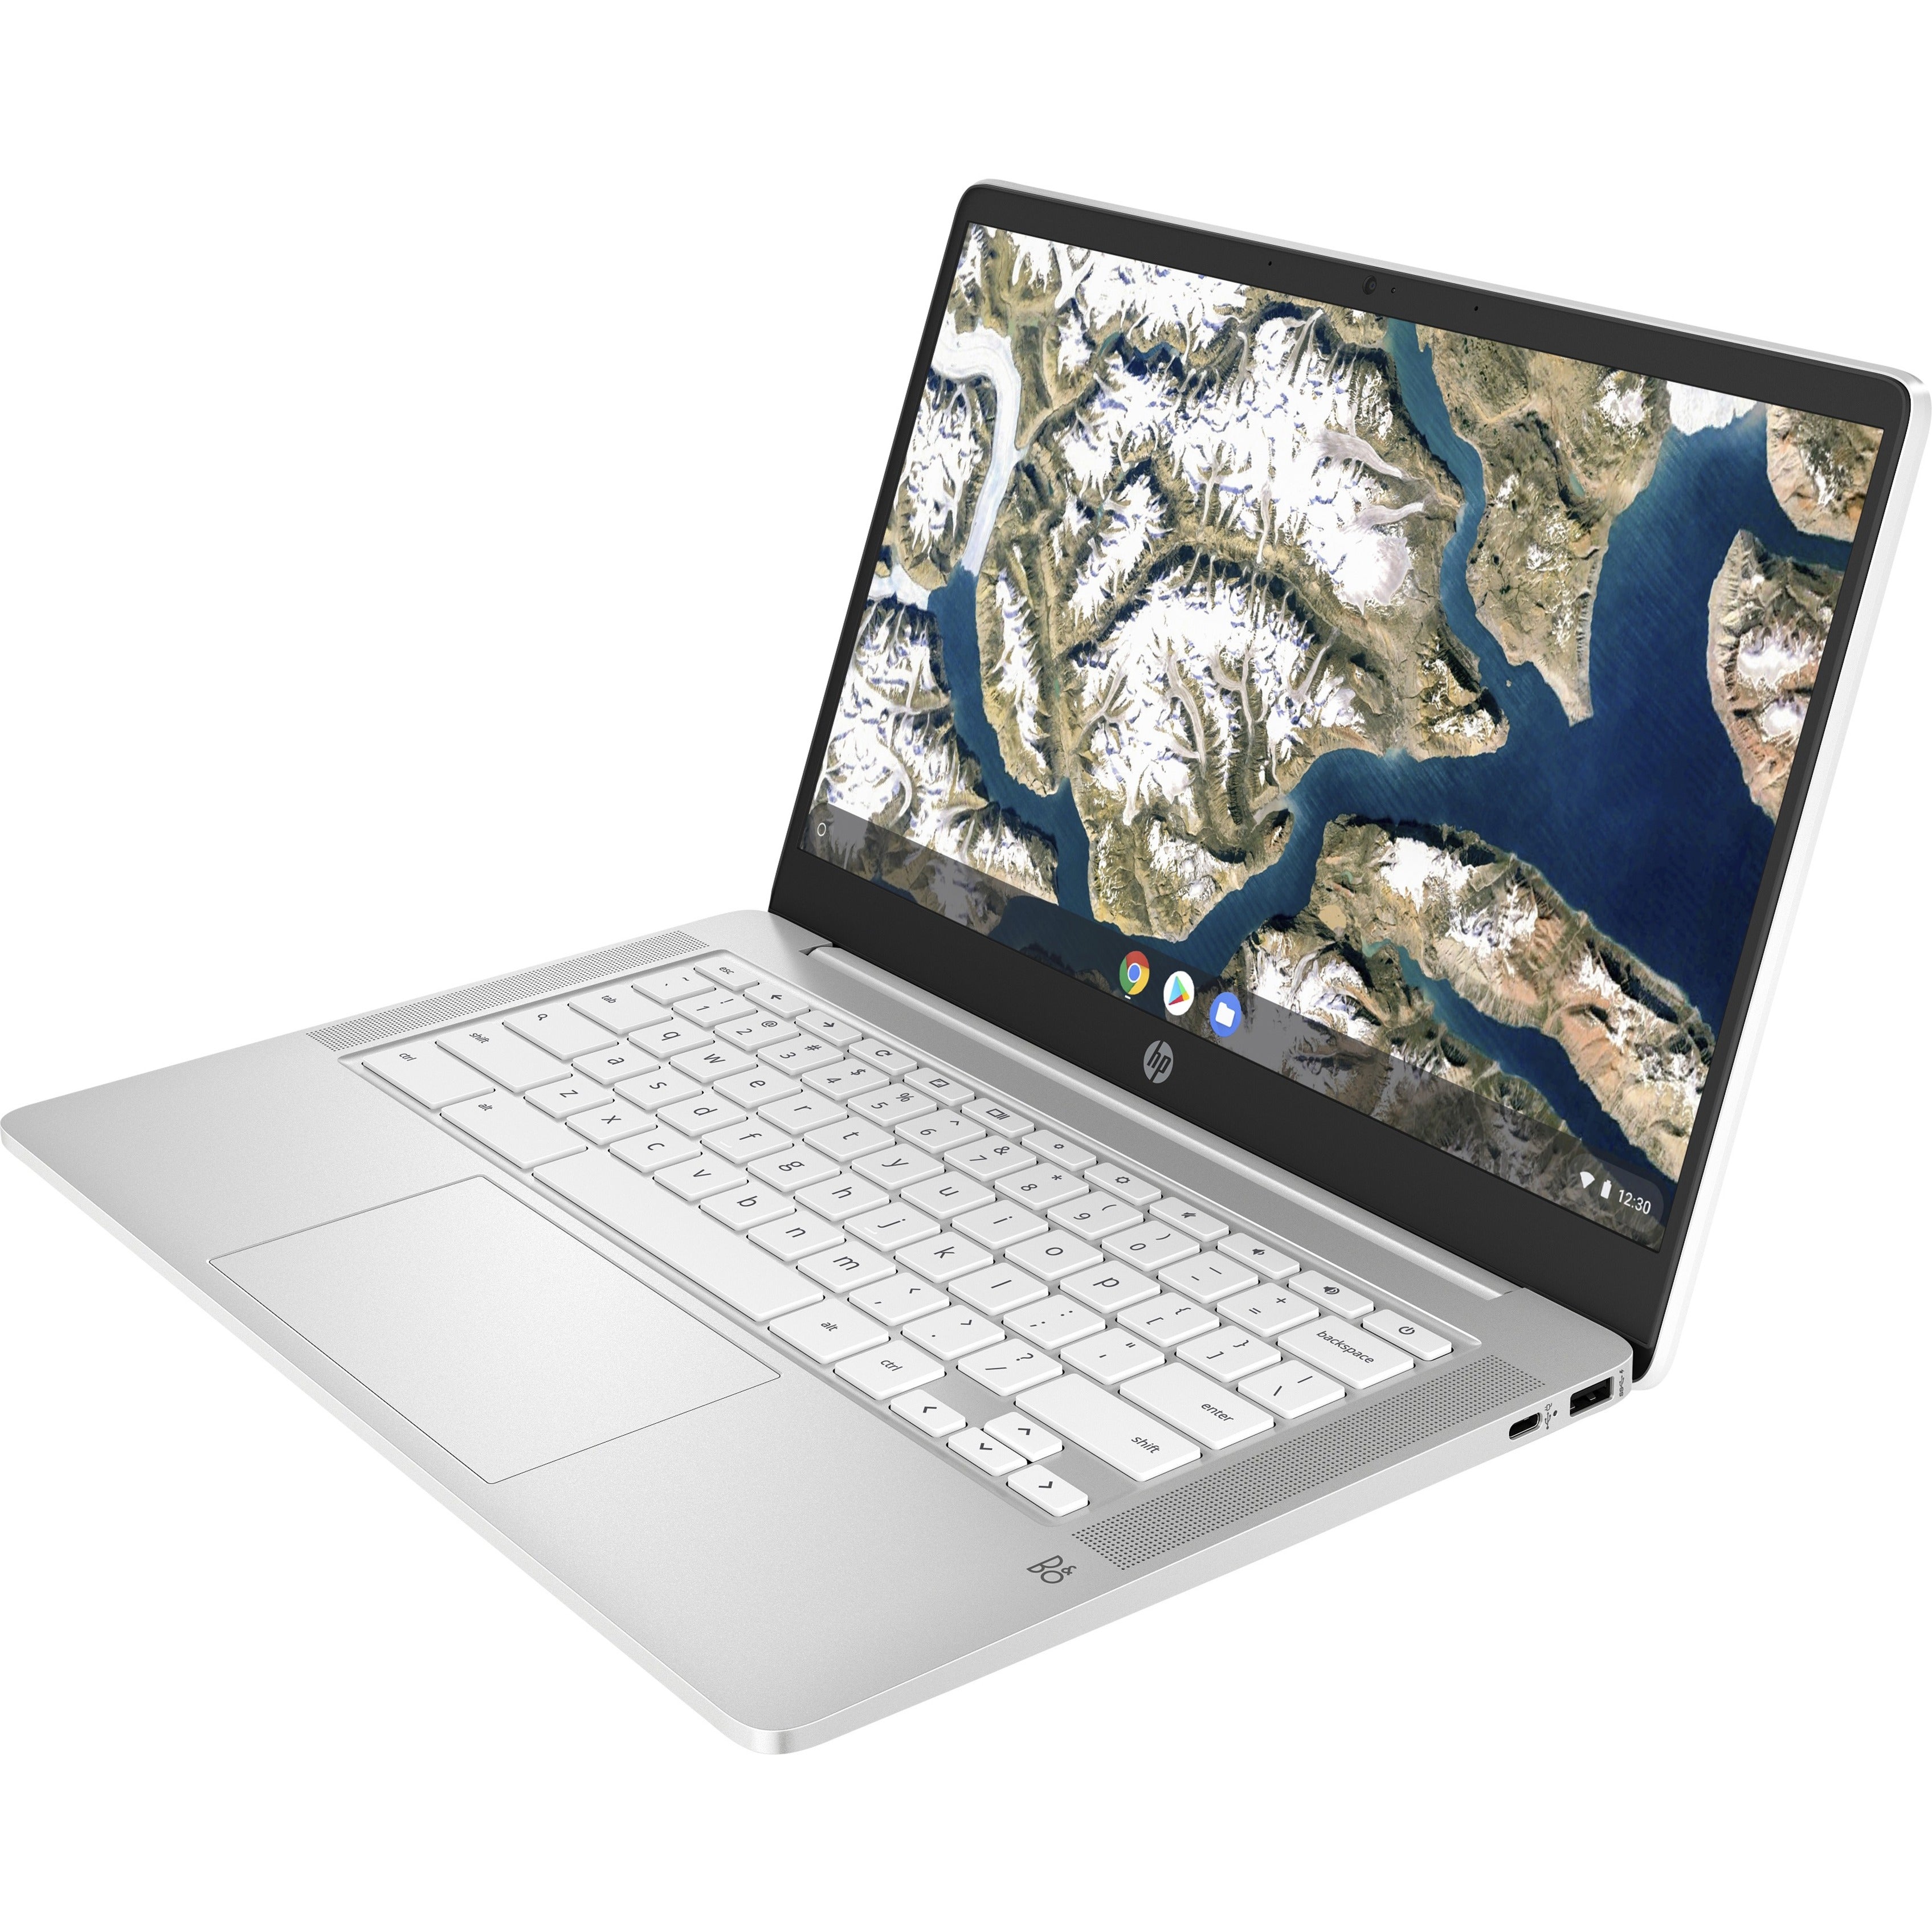 Marca: HP Chromebook 14a-na0240nr 14 Pantalla táctil Chromebook Intel Celeron N4120 Quad-core 4GB RAM 64GB Memoria Flash Blanco cerámico